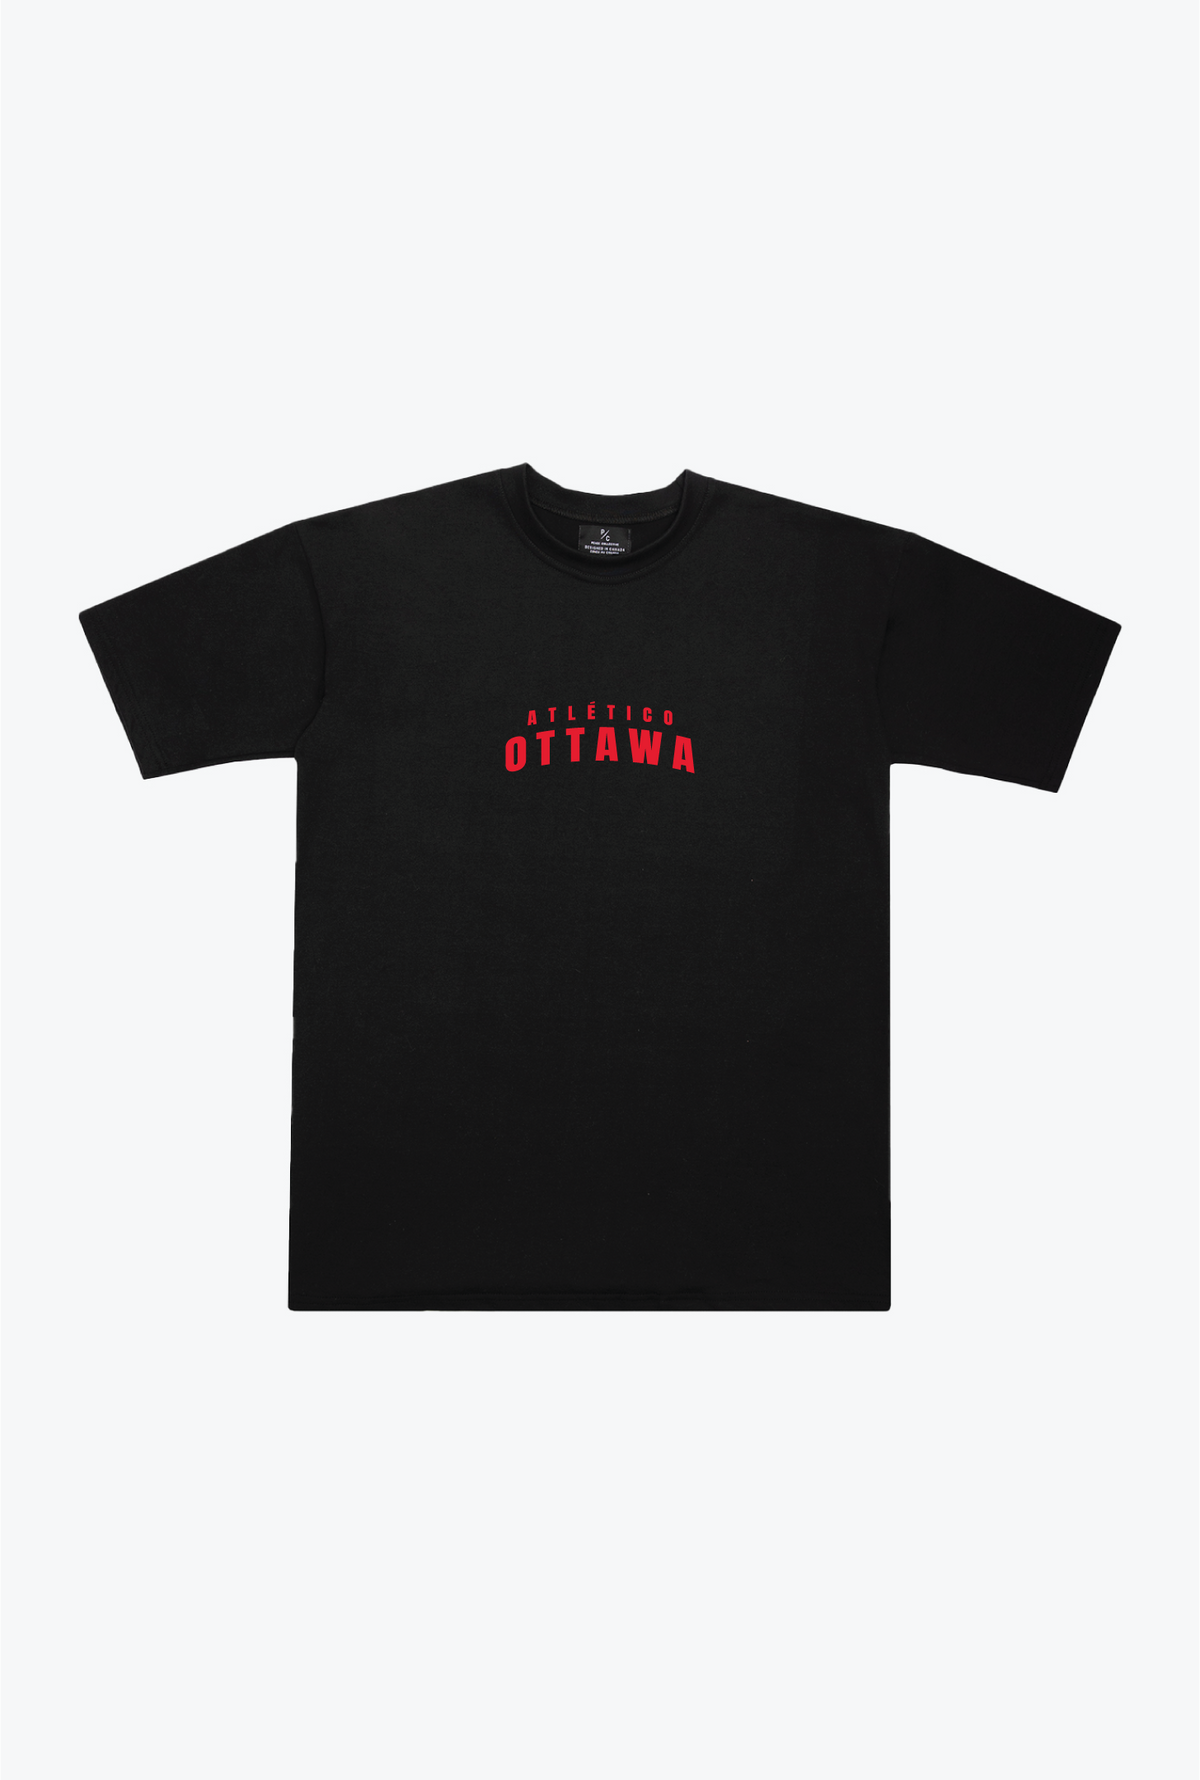 Atletico Ottawa Heavyweight T-Shirt - Black